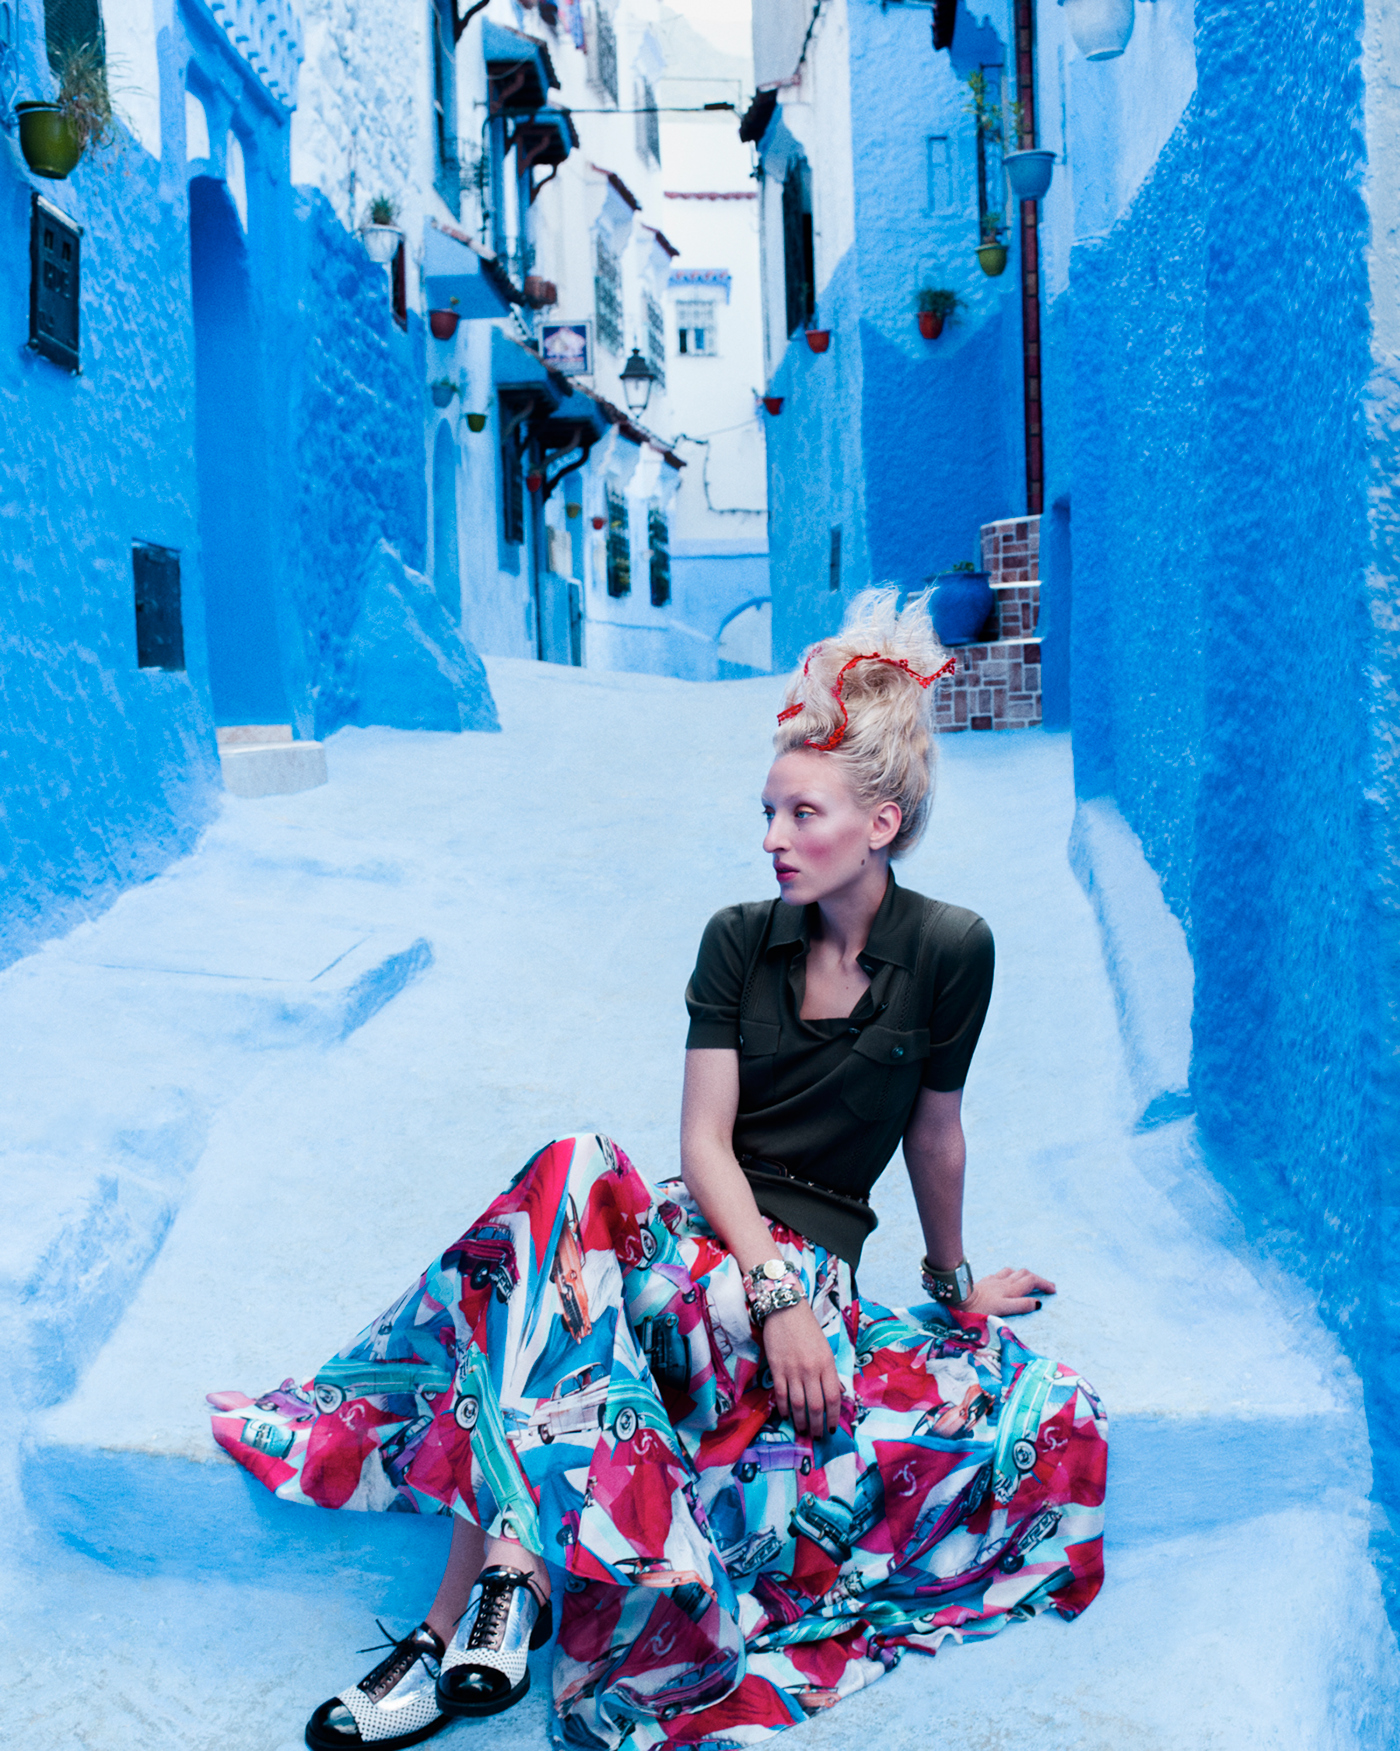 The Fairytale of Morocco, photography by Elizaveta Porodina